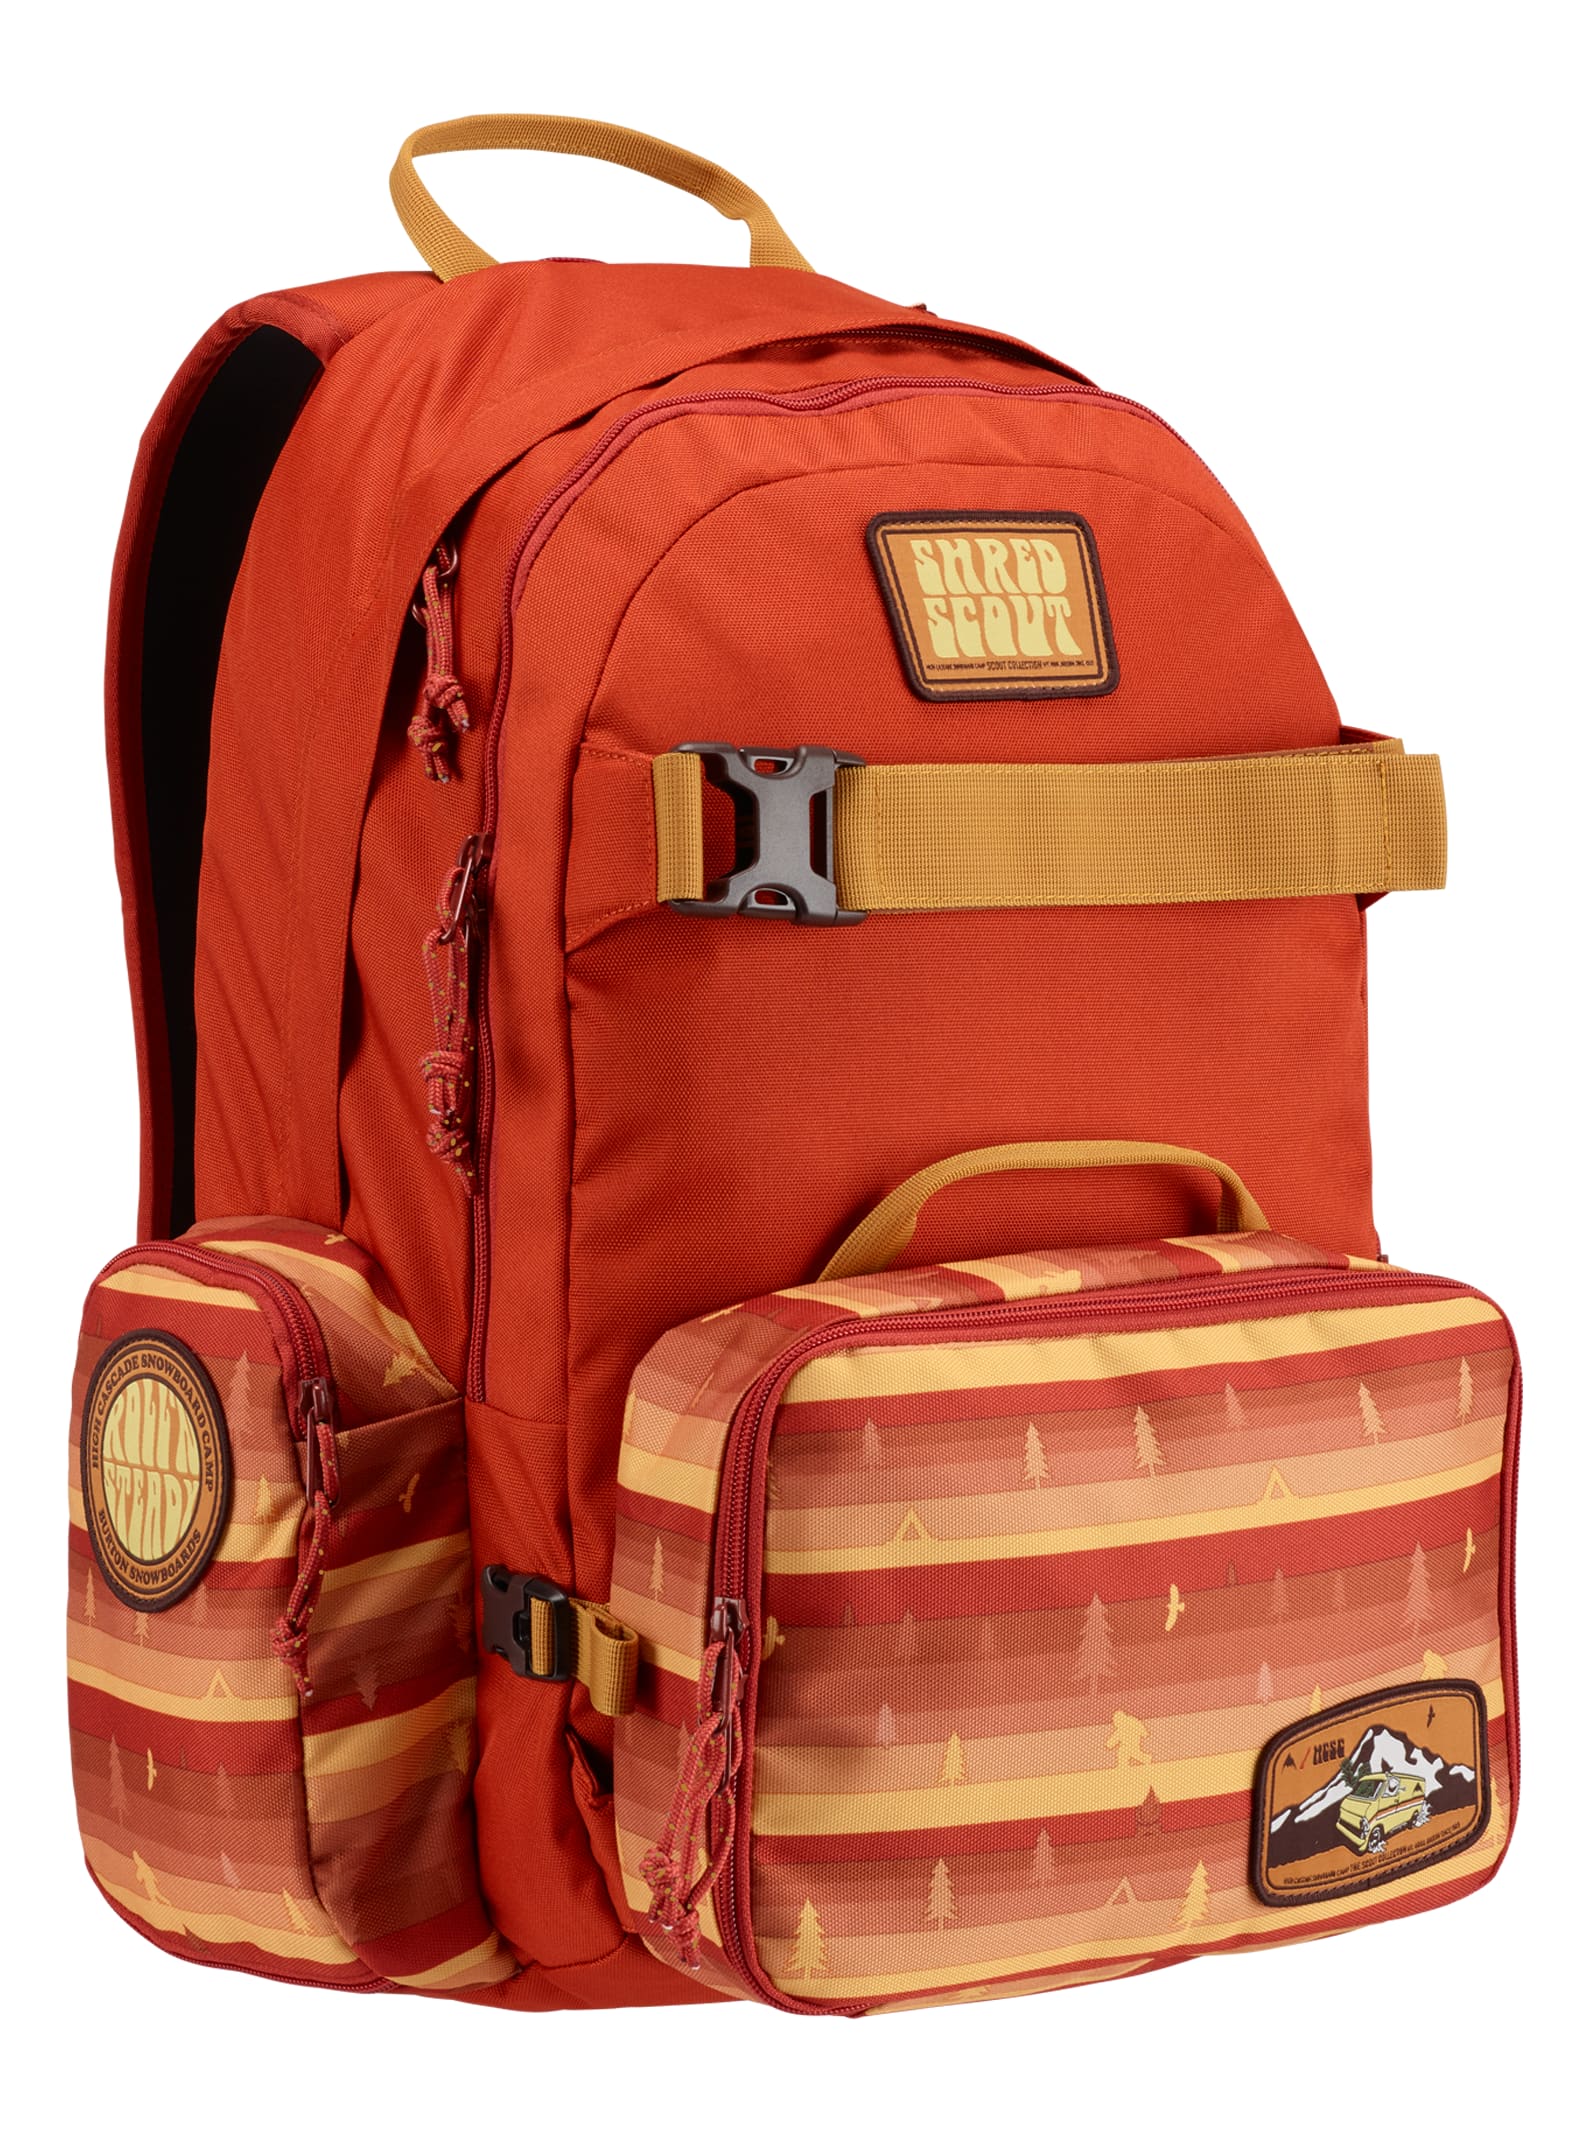 Rucksack Backpack Tasche BURTON HCSC SCOUT Rucksack 2018 mantle orange Backpack 